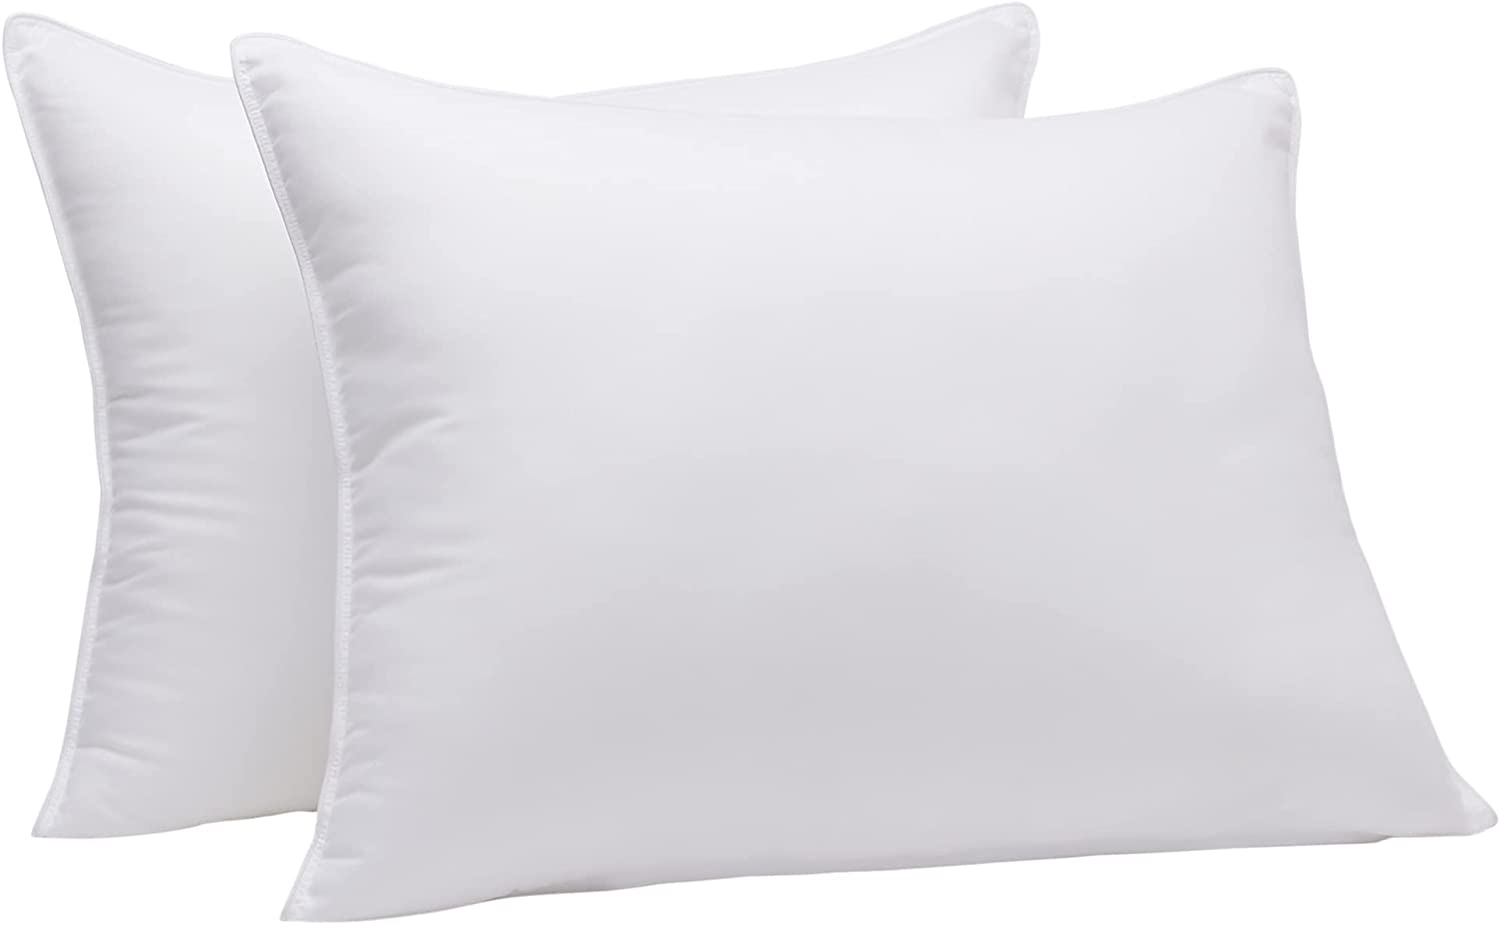 AmazonBasics OEKO-TEX Certified King Size Pillows, Set Of 2